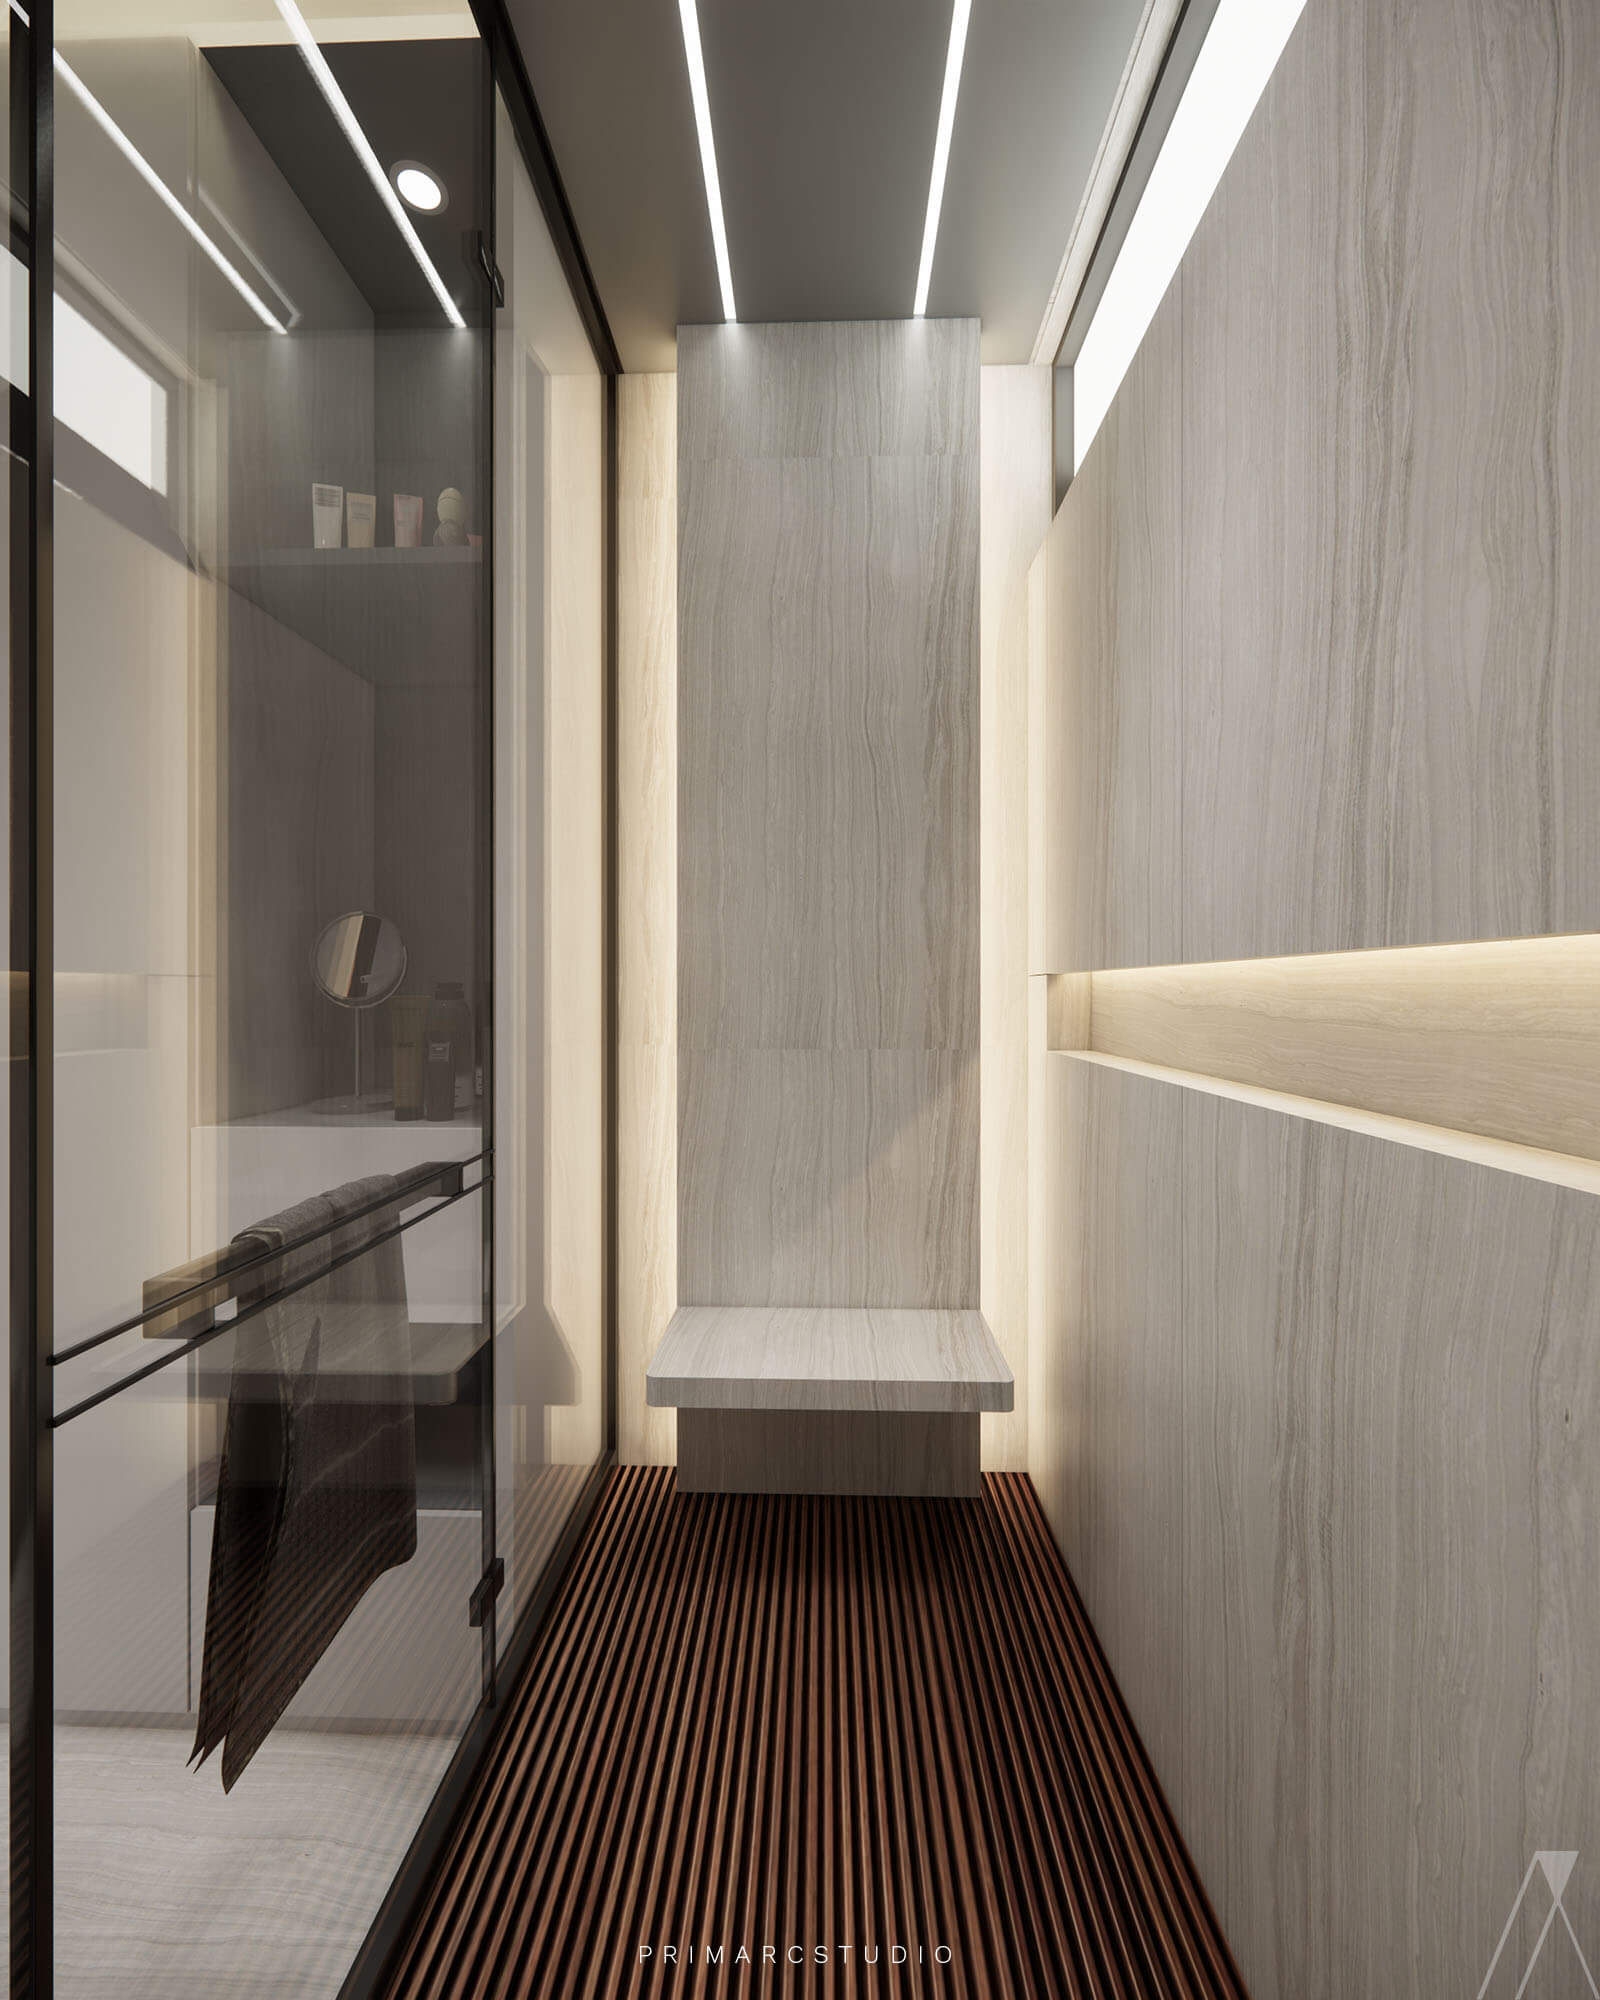 Washroom interior design in neutral colors shower area sitting area